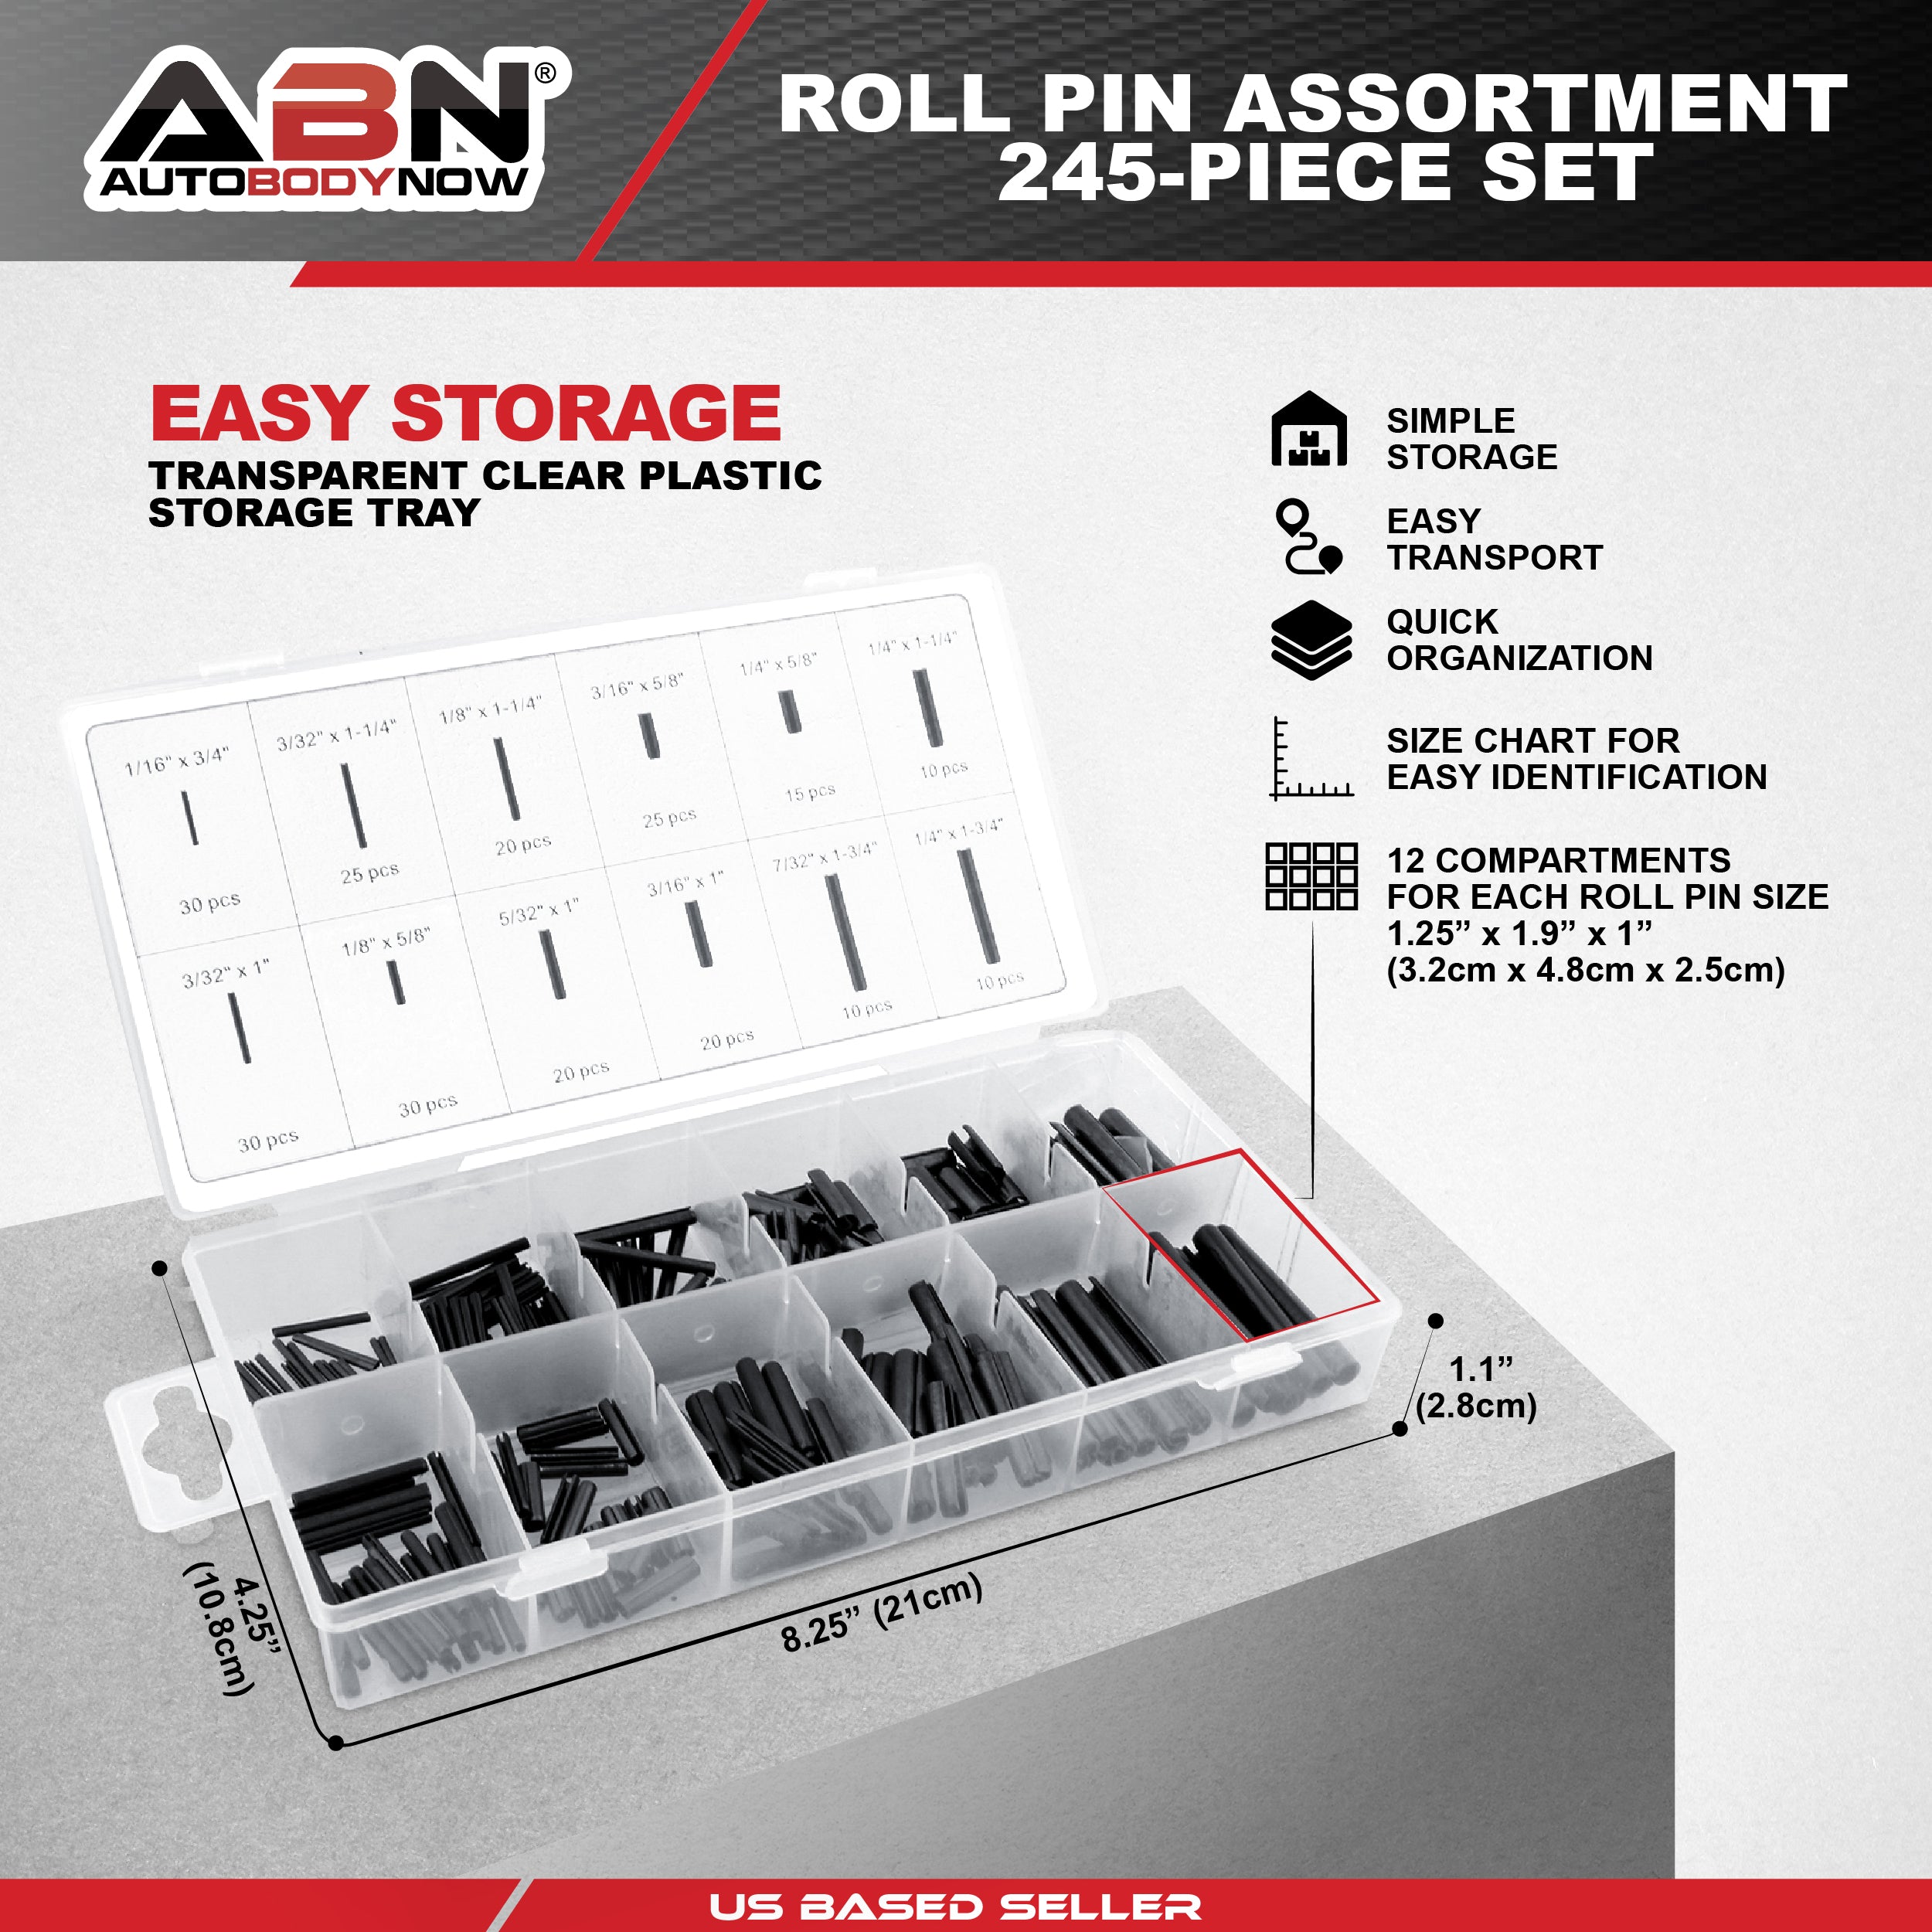 Roll Pin Assortment Kit 245-Piece Set